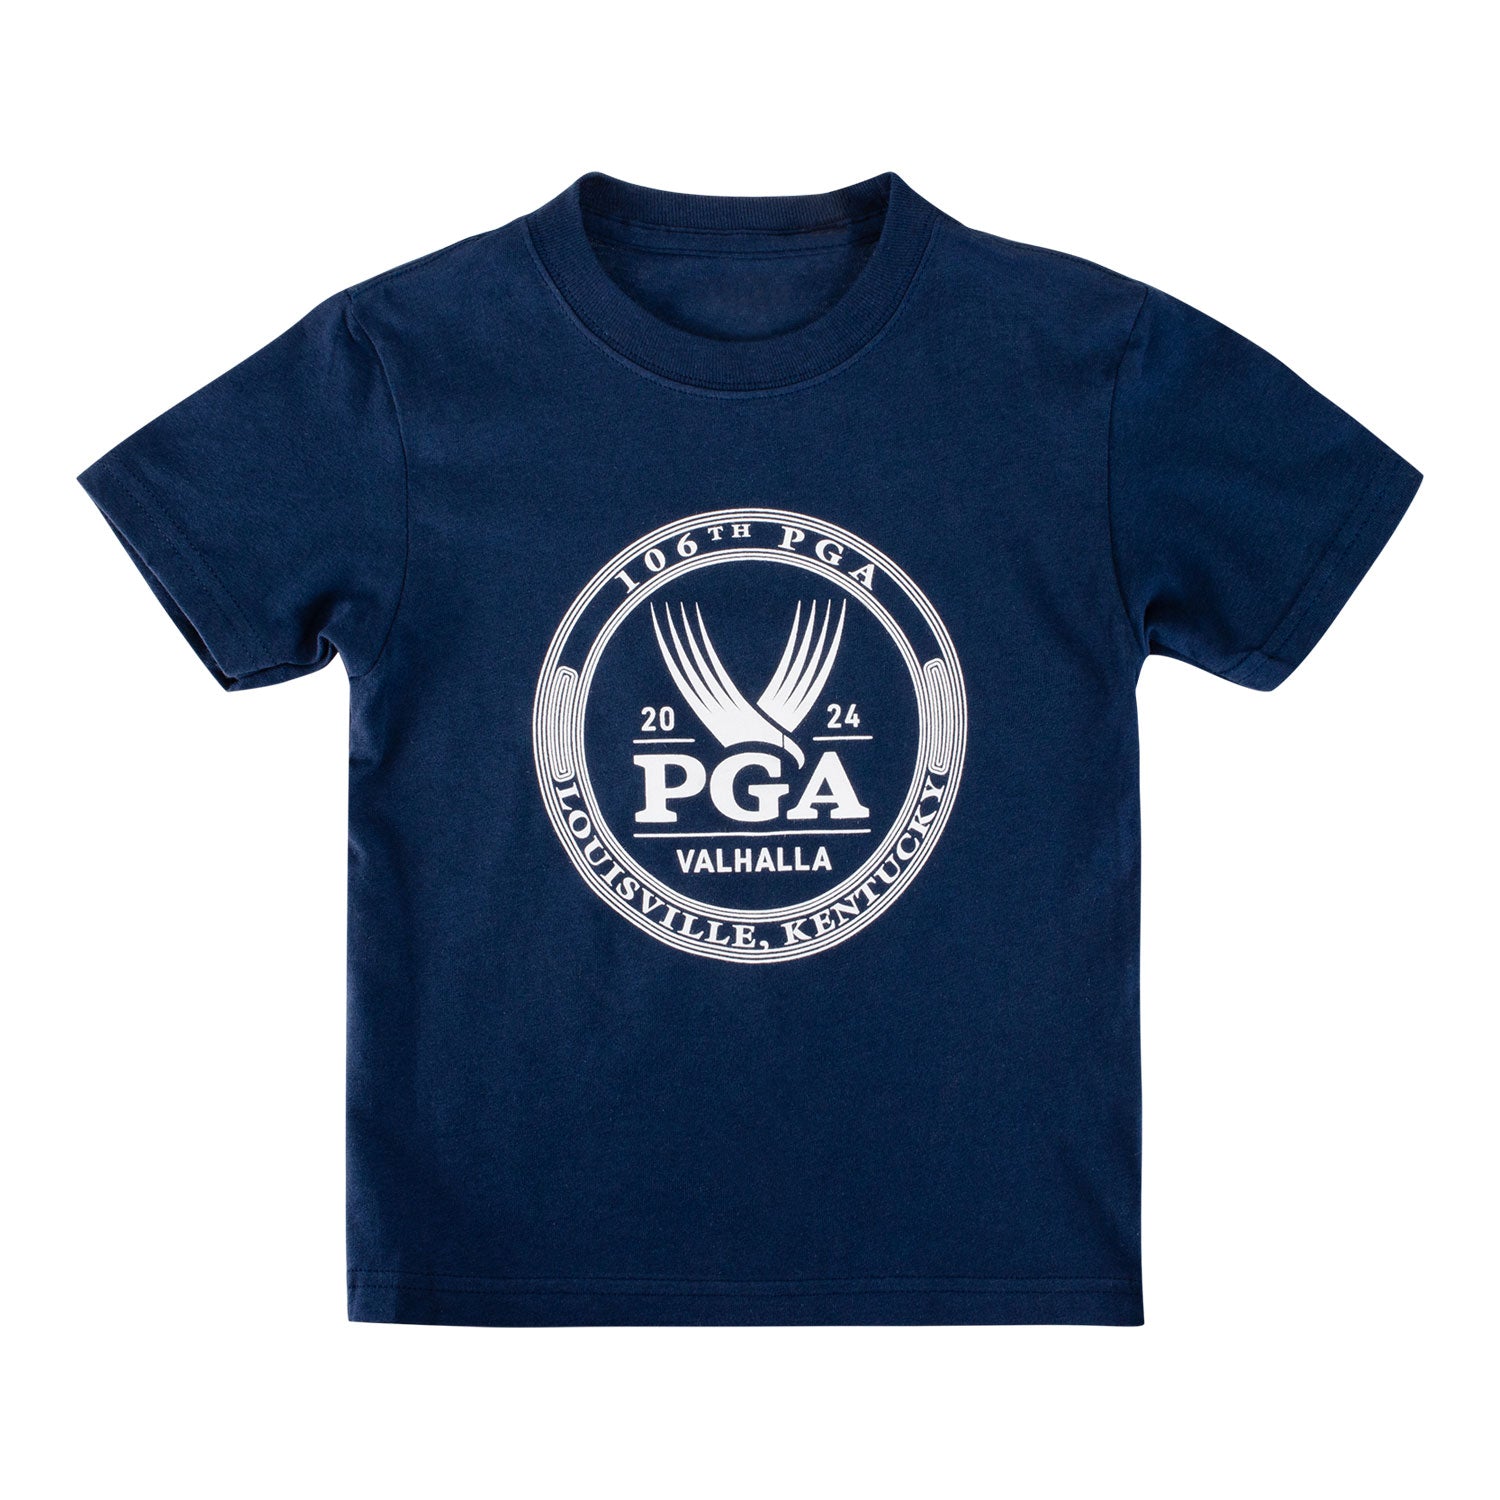 Garb 2024 PGA Championship Toddler T-Shirt in Navy - Front View